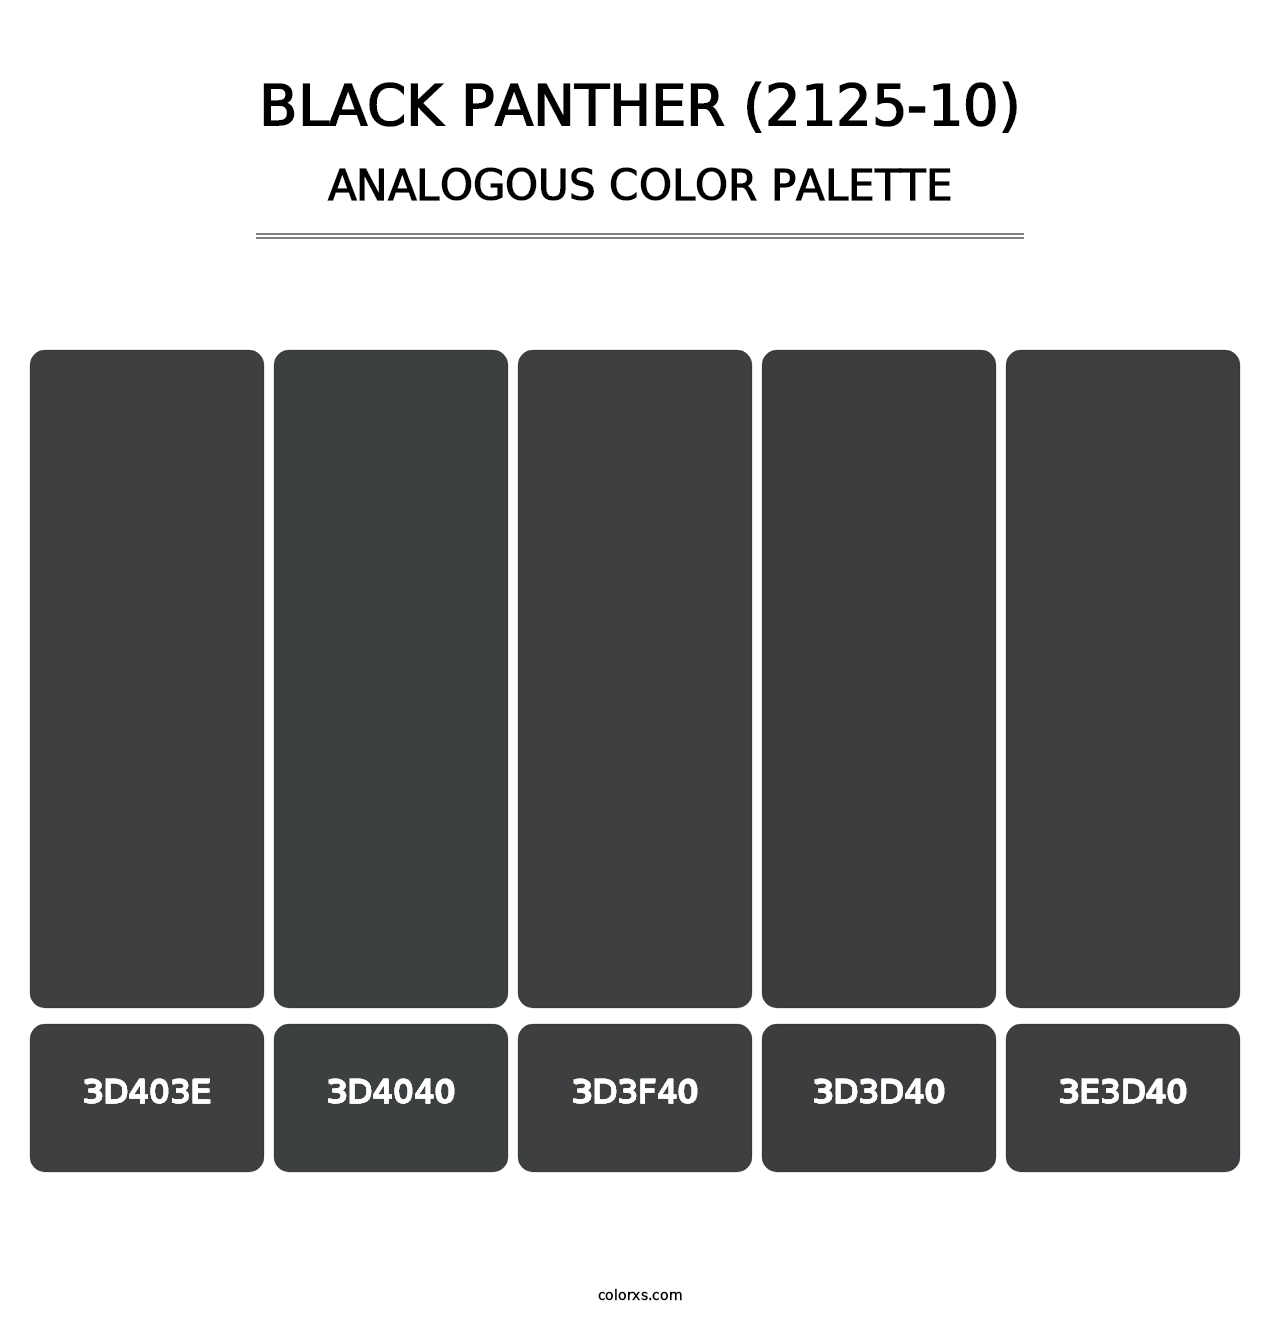 Black Panther (2125-10) - Analogous Color Palette